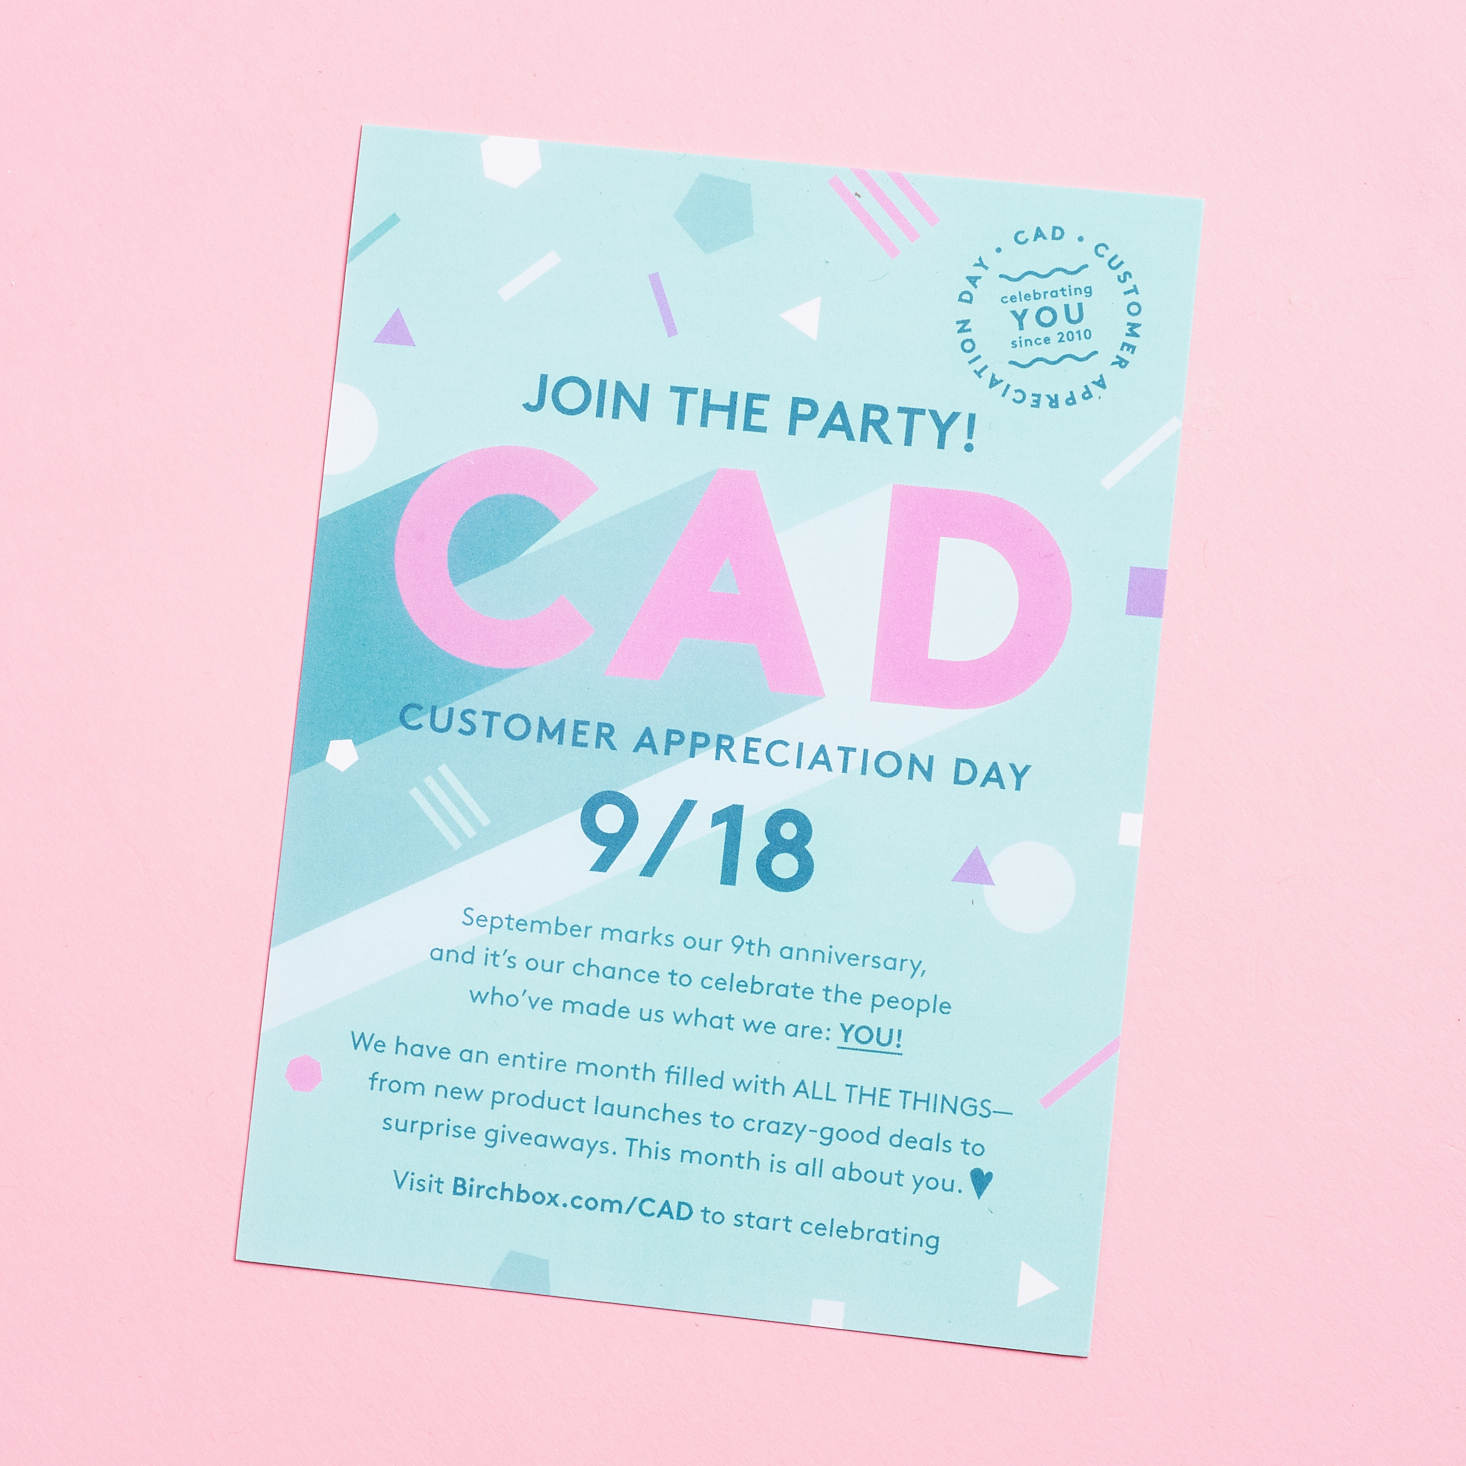 Customer Appreciation Day info card